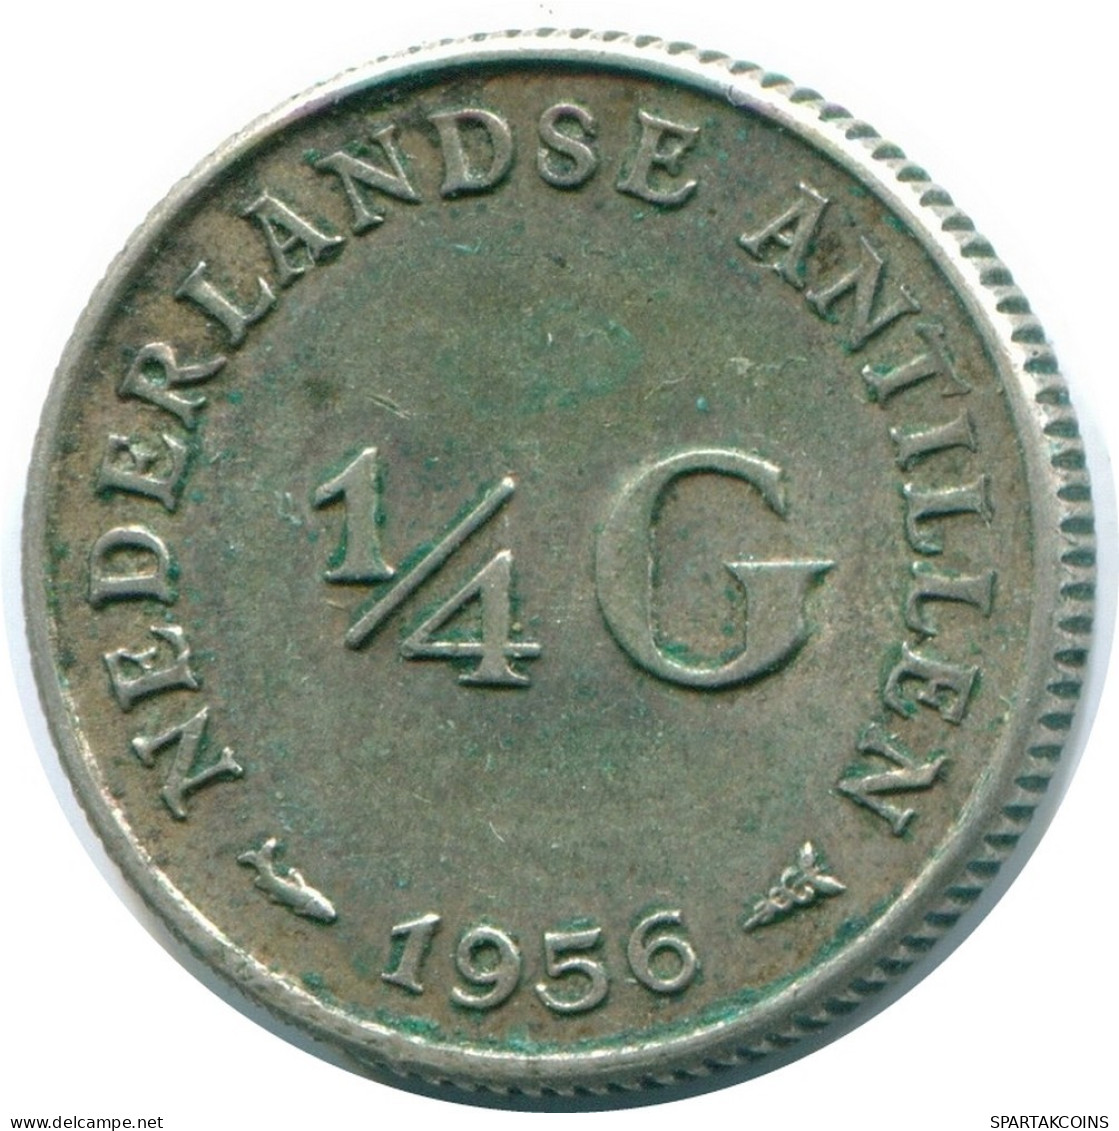 1/4 GULDEN 1956 NETHERLANDS ANTILLES SILVER Colonial Coin #NL10939.4.U.A - Niederländische Antillen